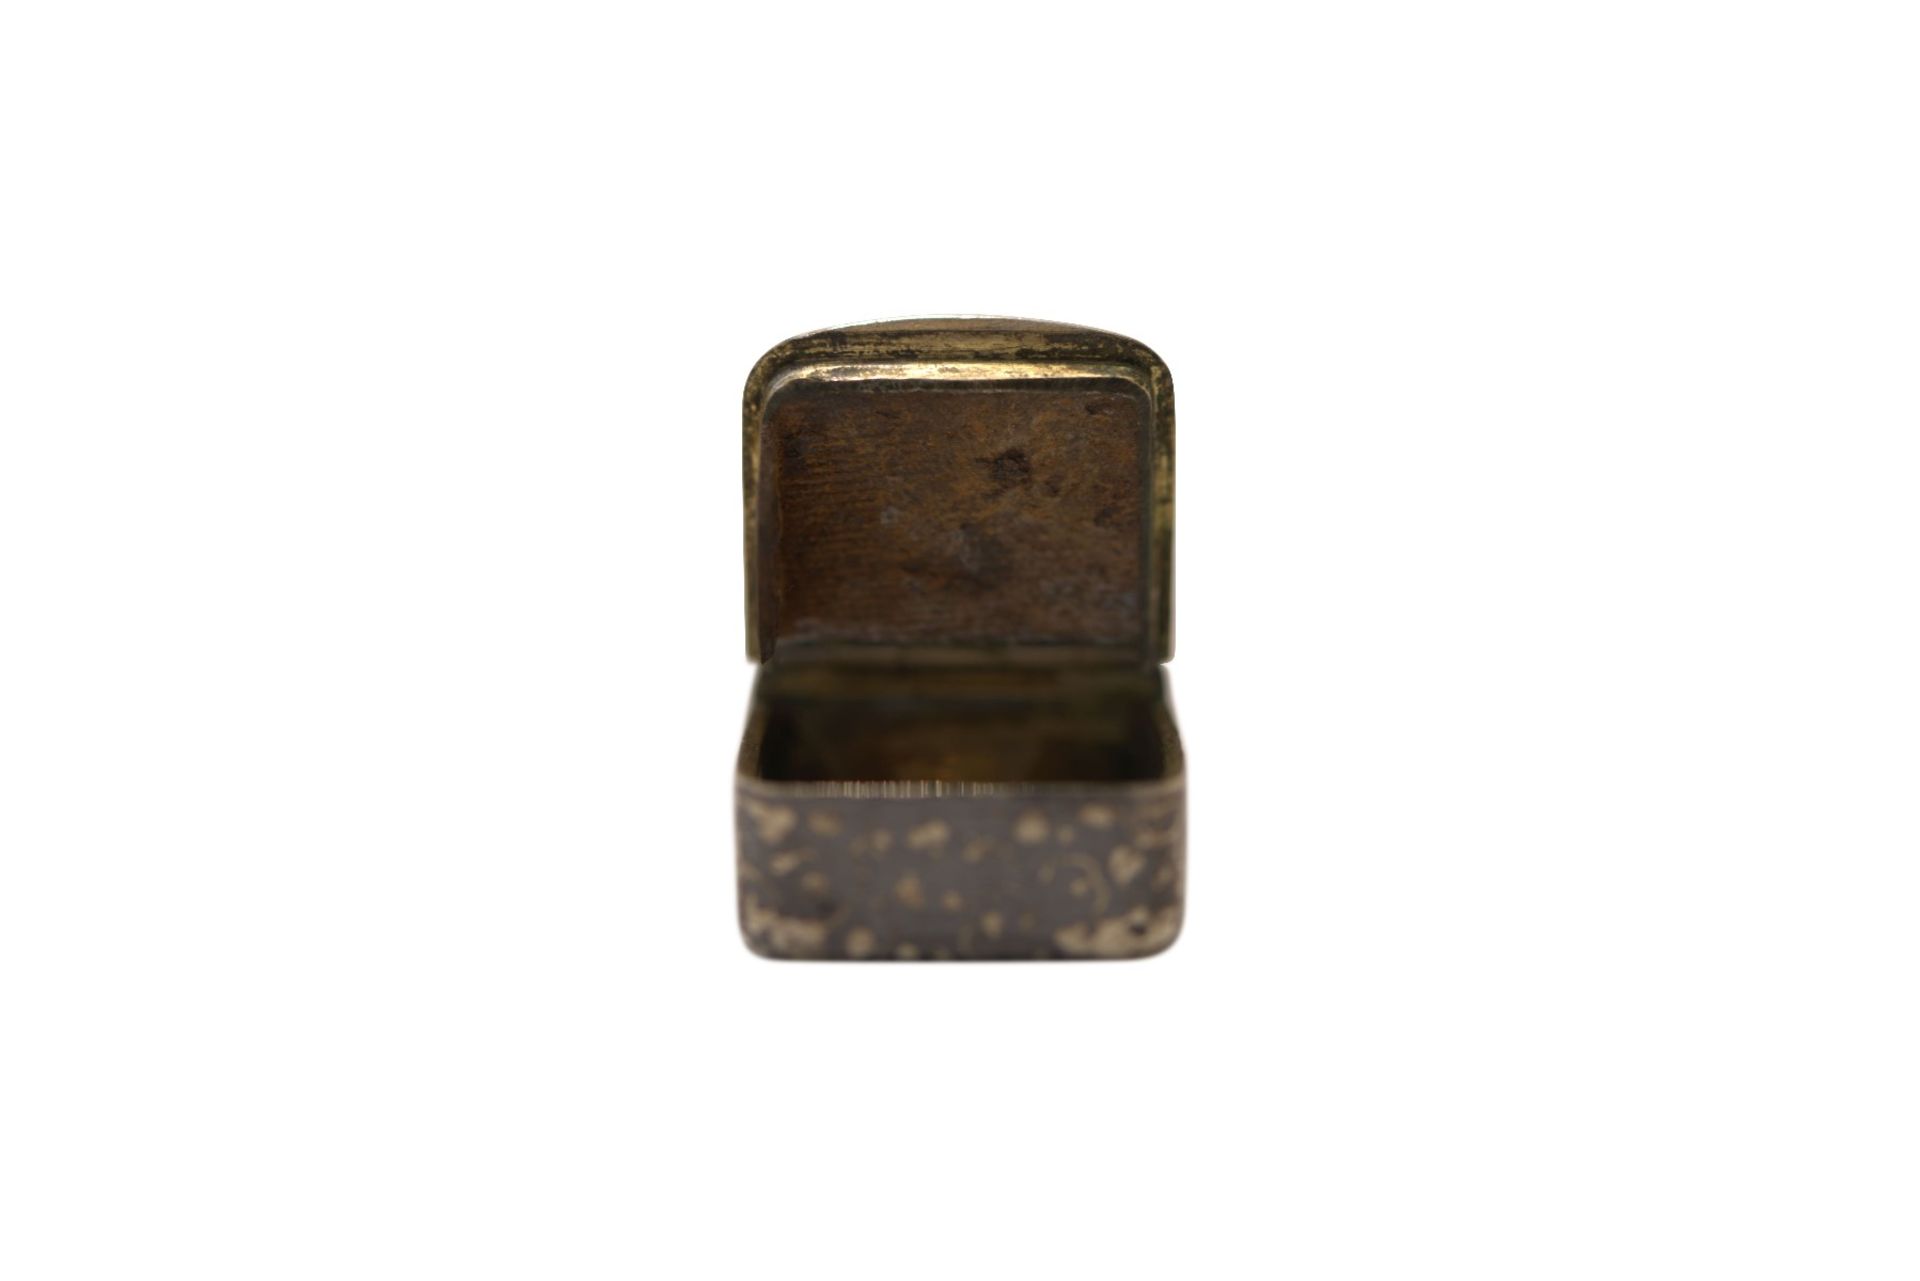 Cigar cutter case silver 800/000 fine - Image 4 of 4